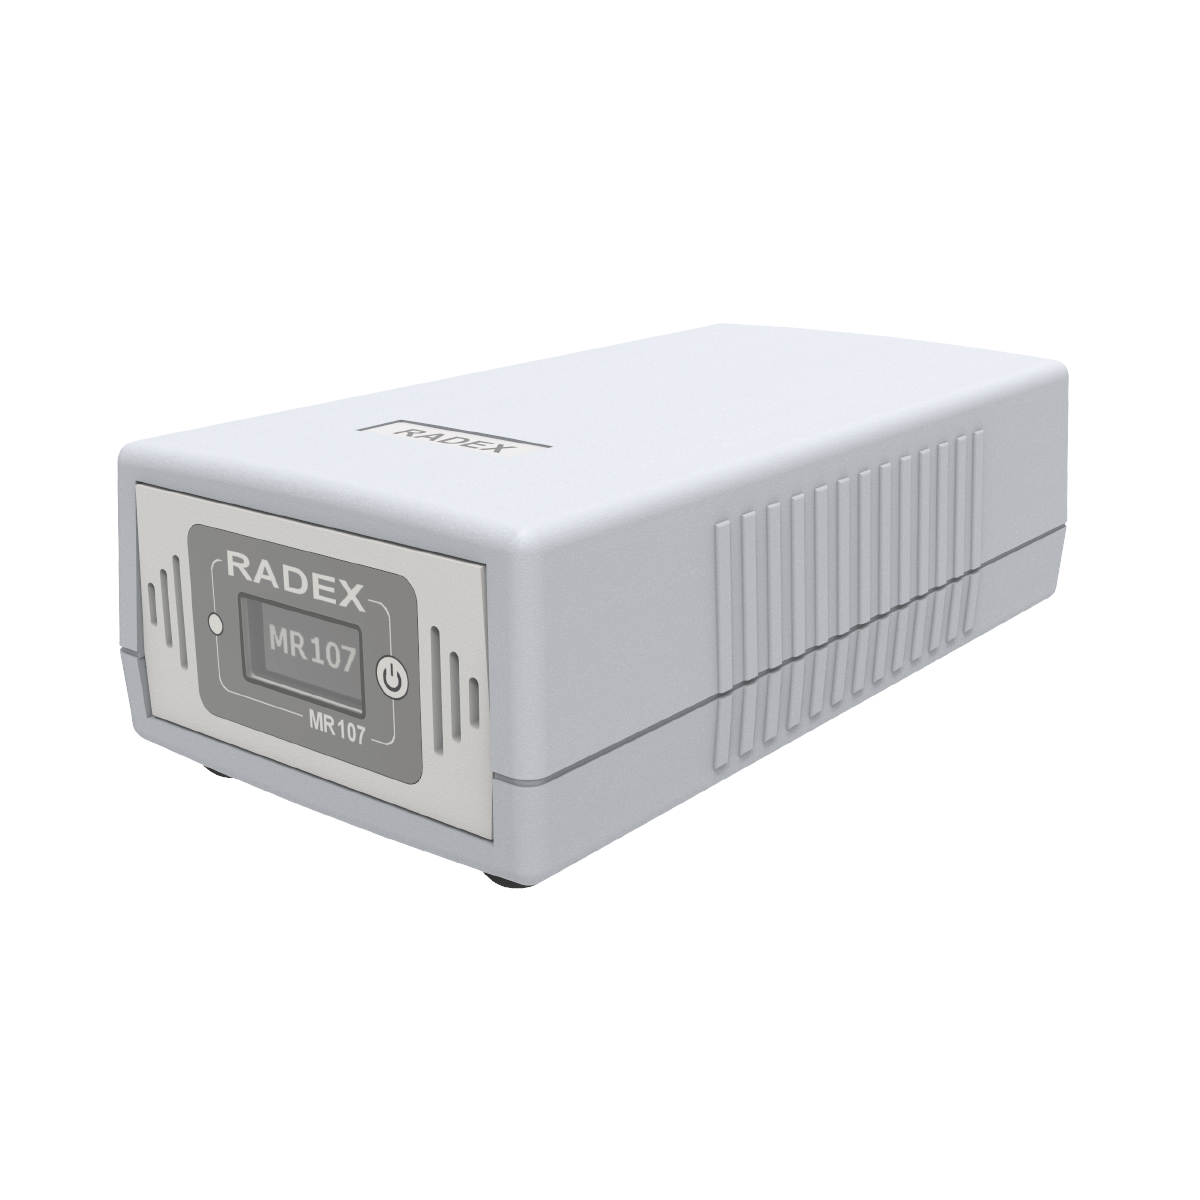 RADEX MR107 Advanced Radon Gas Detector for Homes & Offices